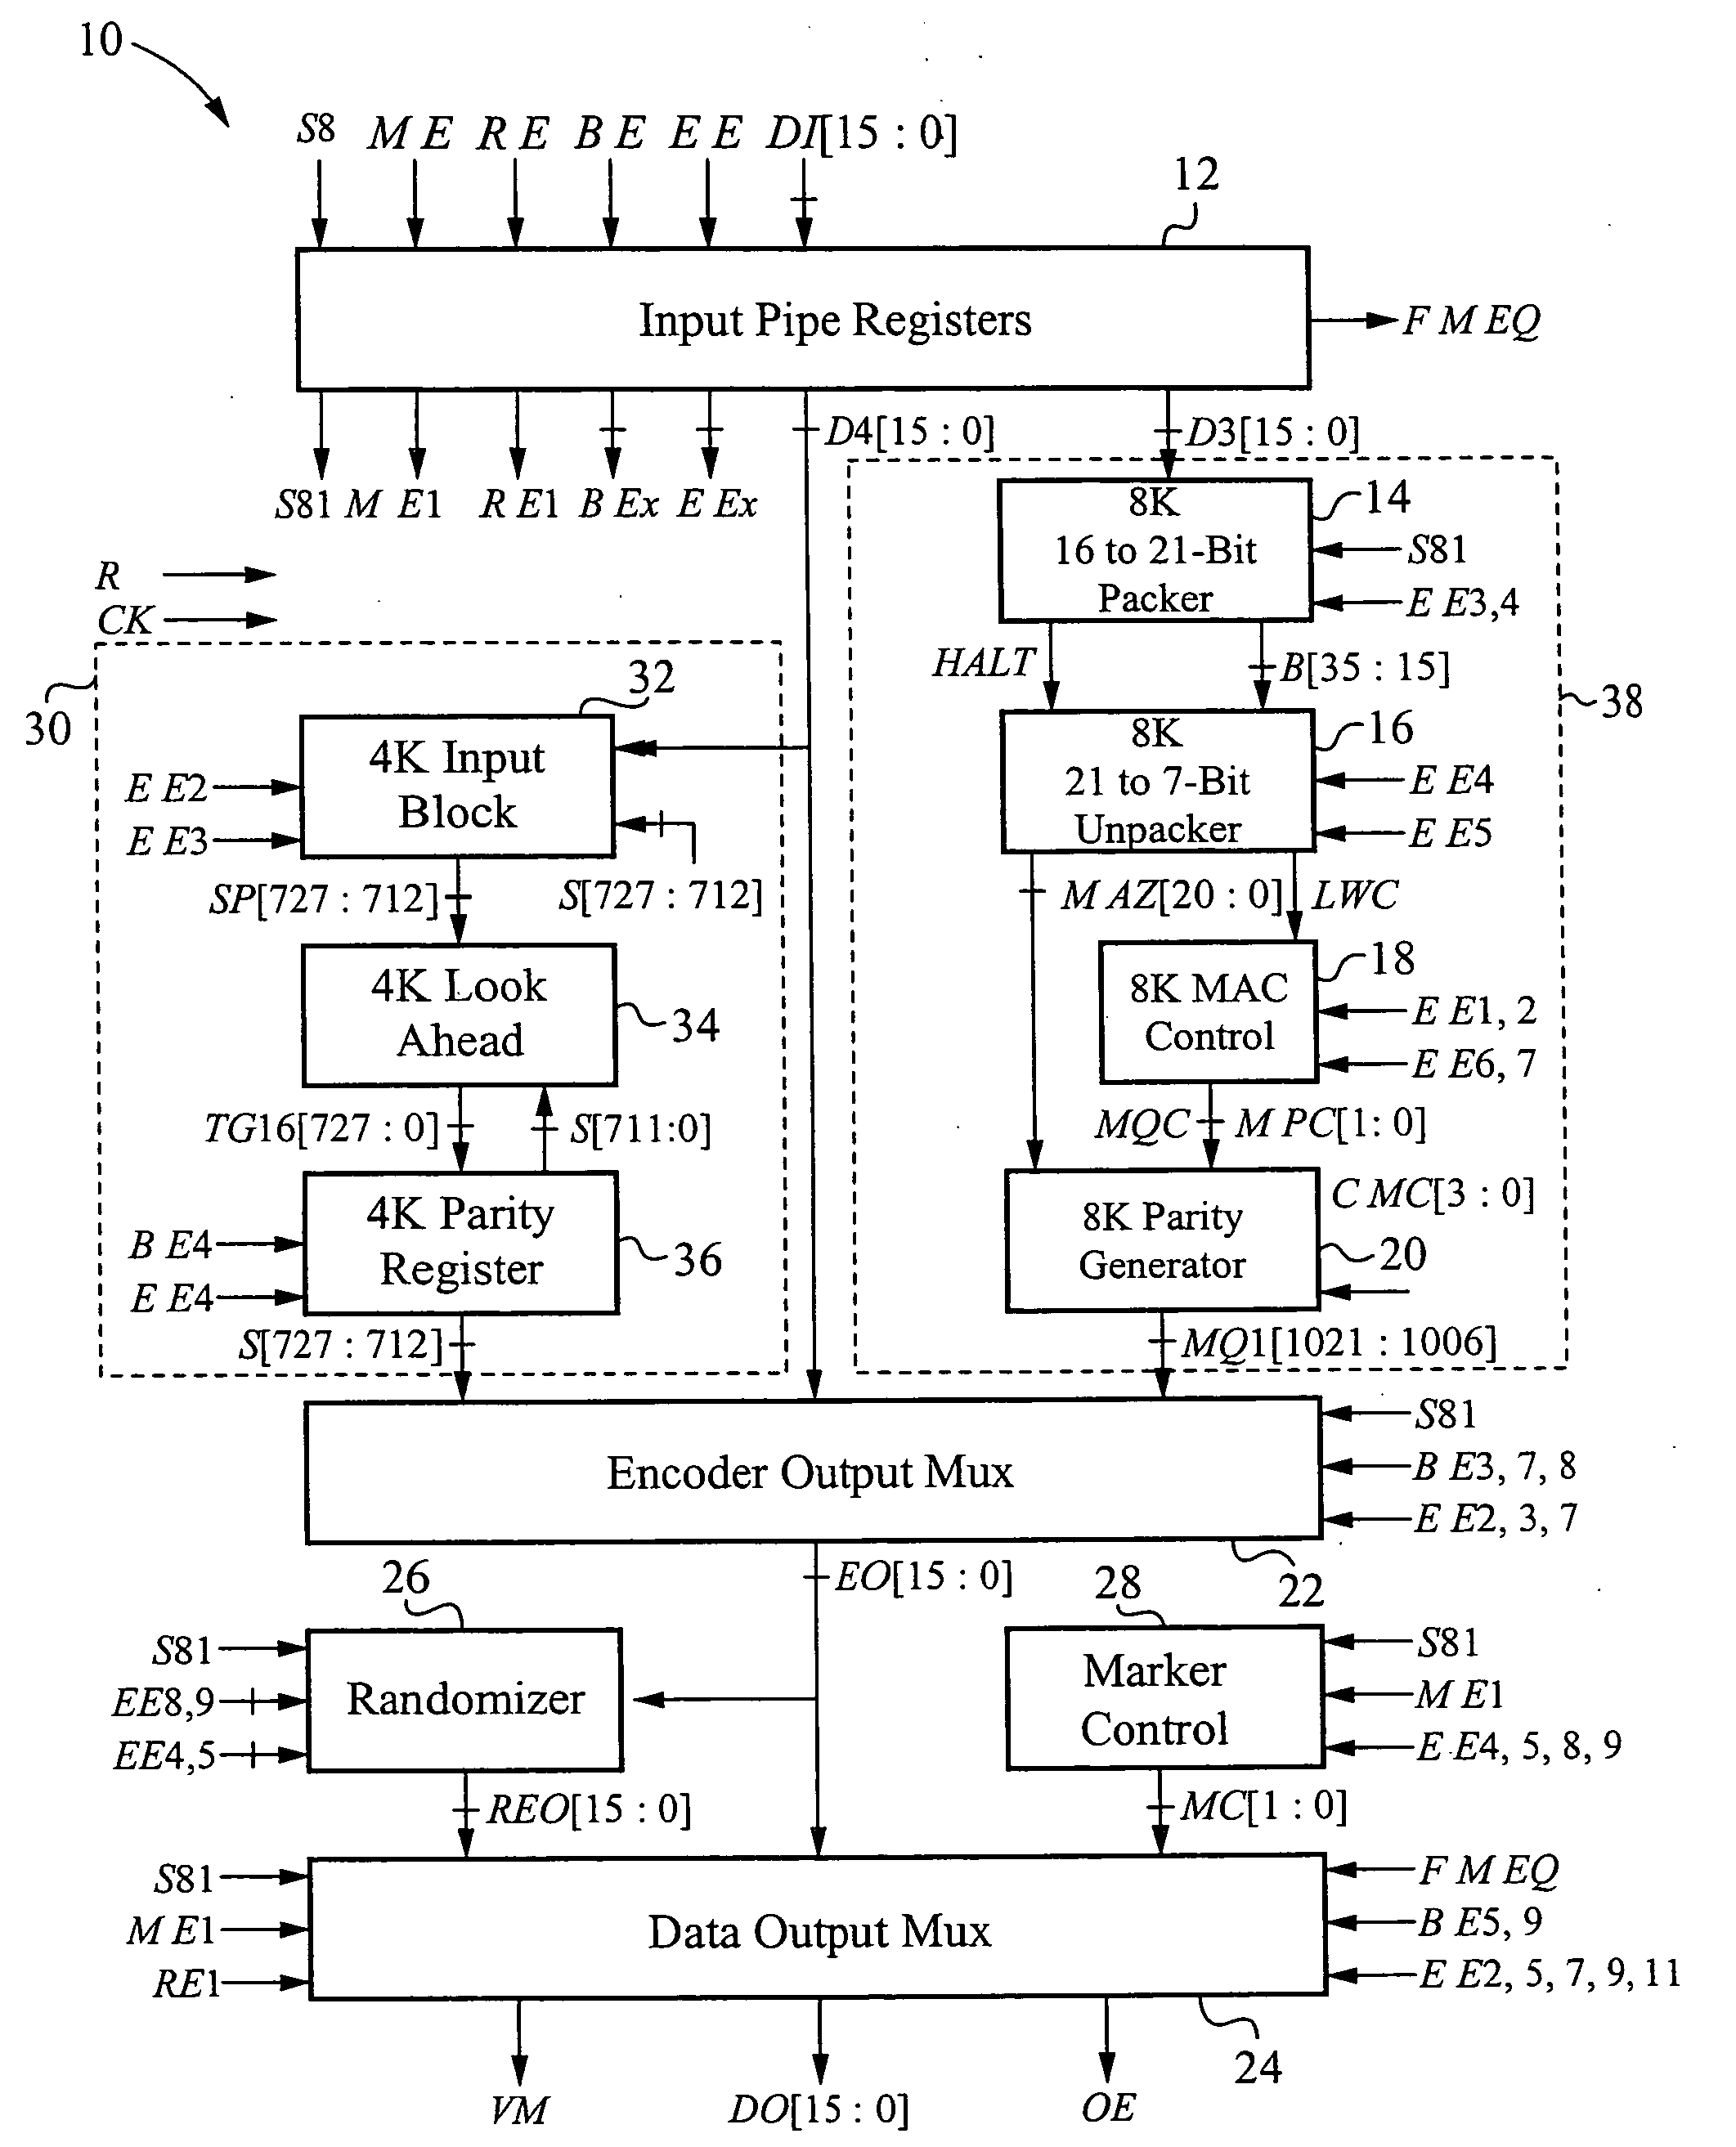 Low-density parity-check (LDPC) encoder